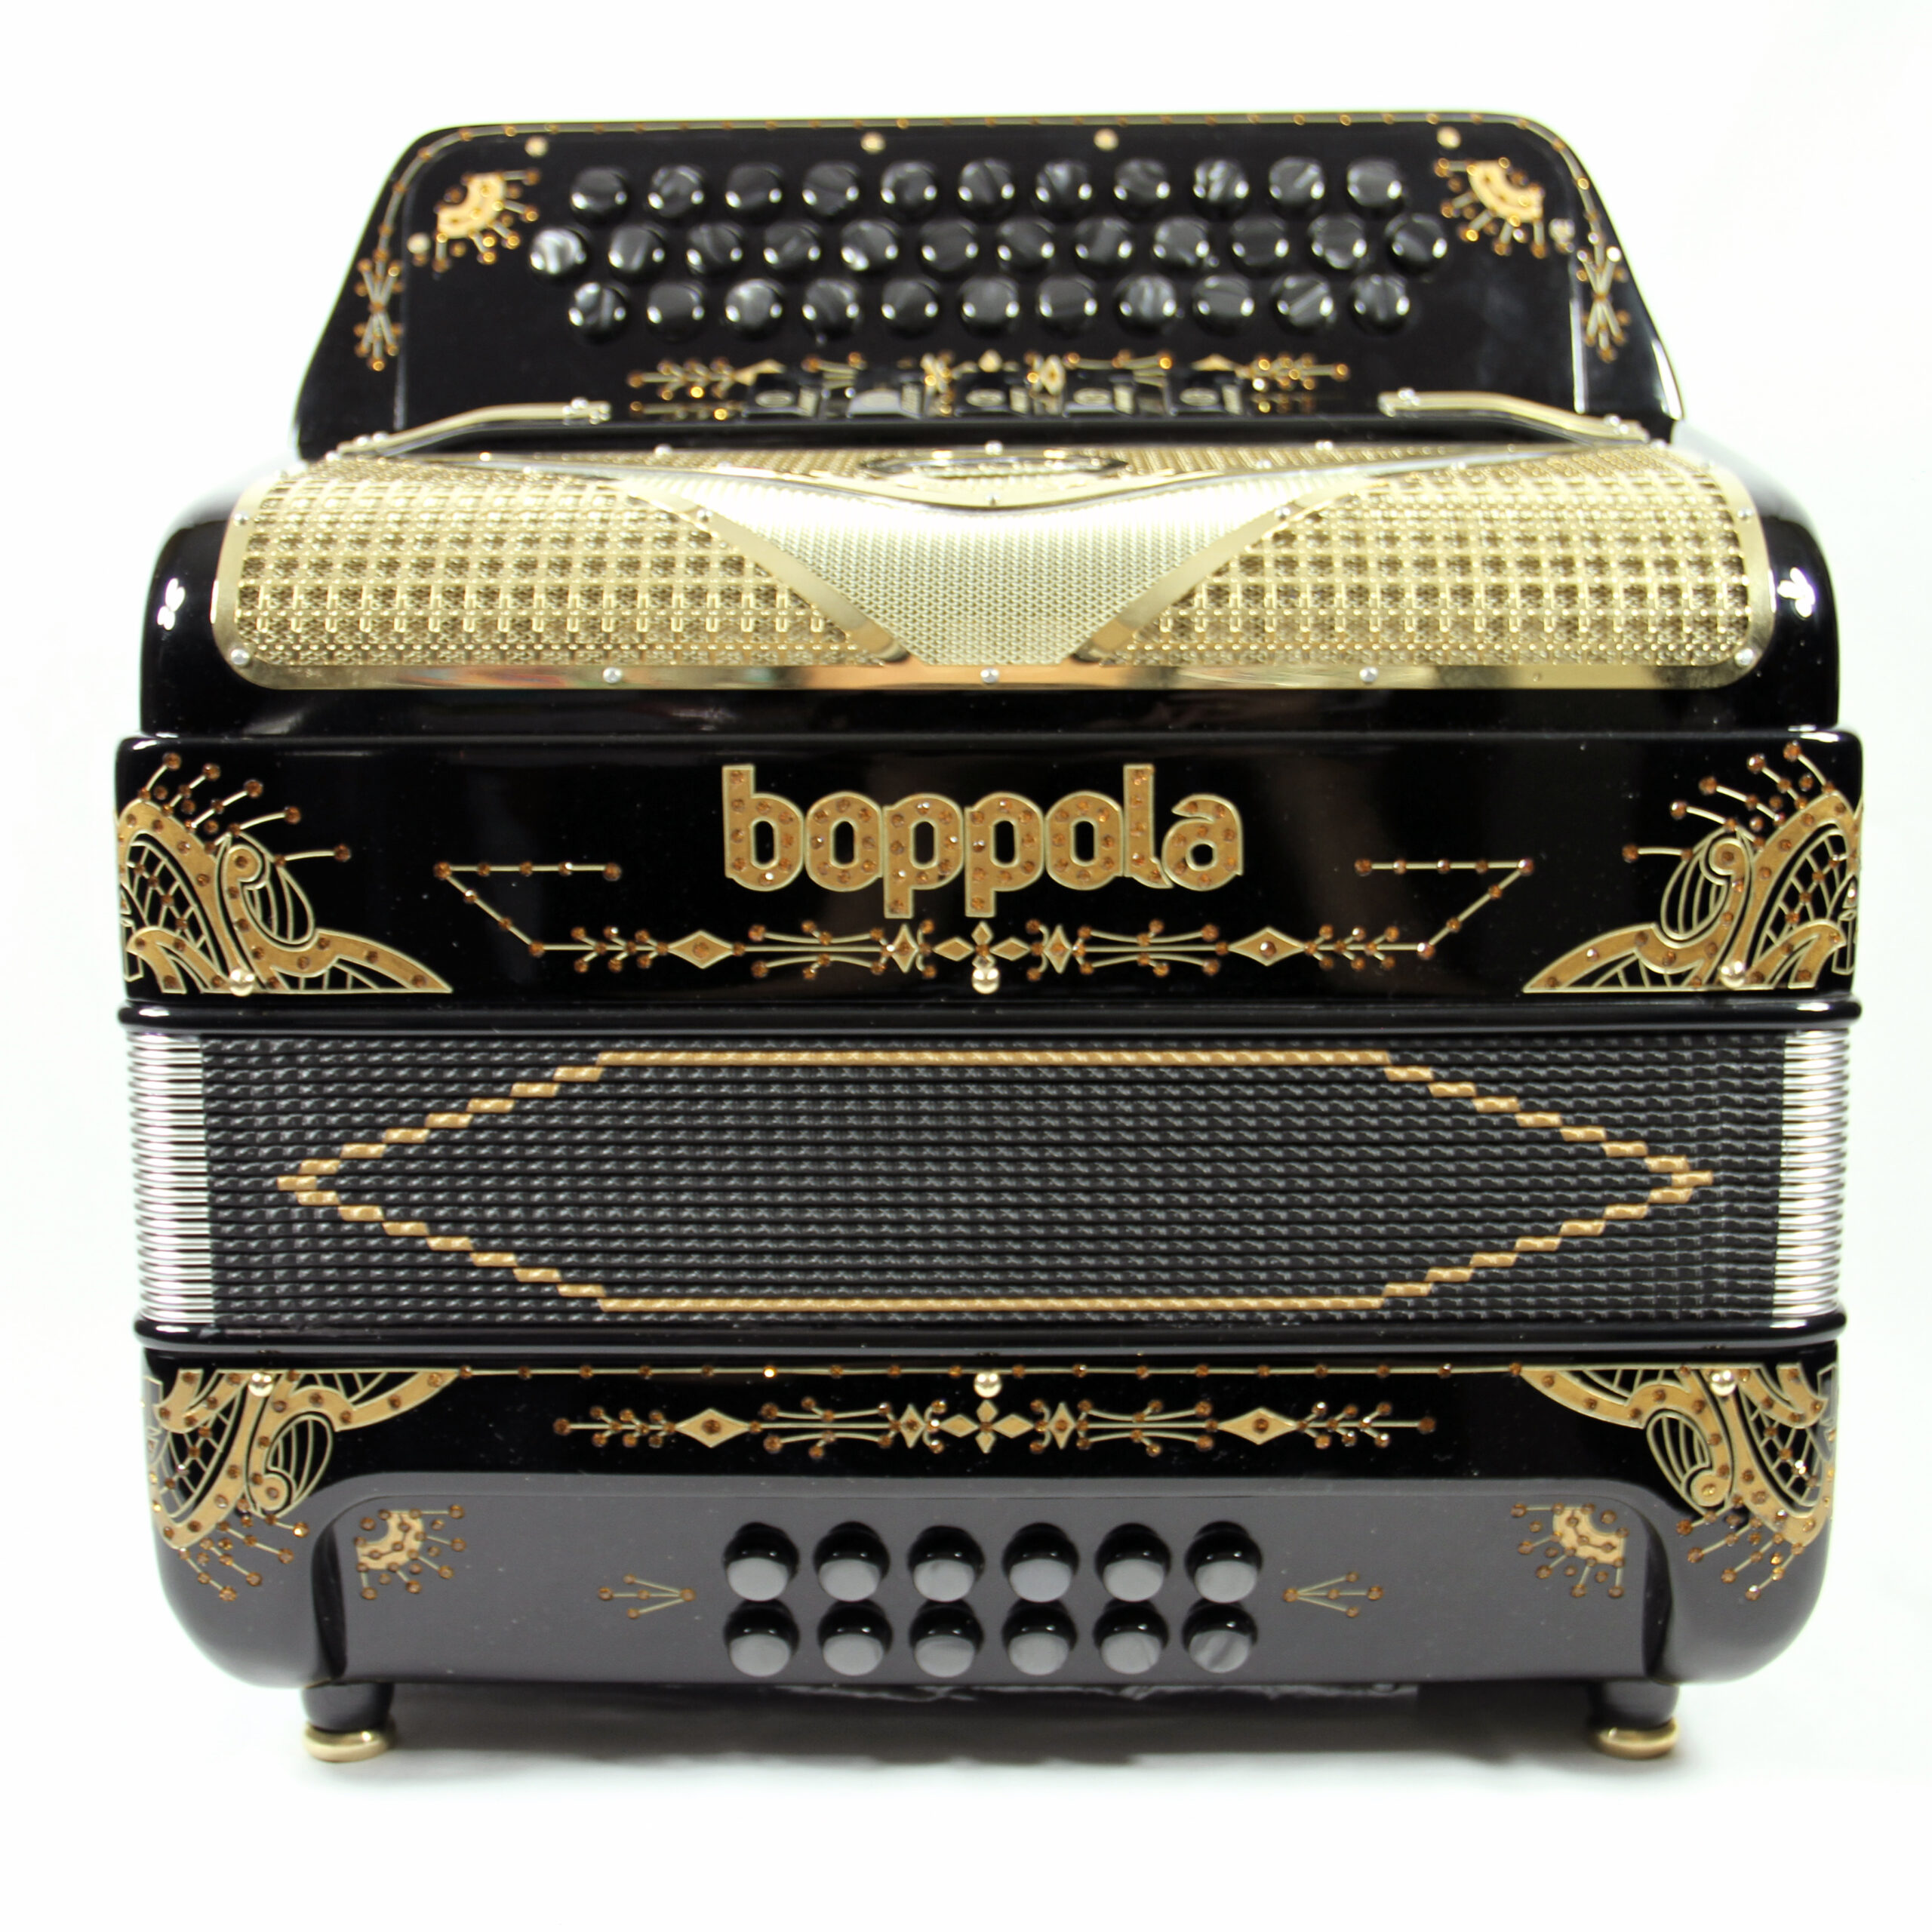 Boppola Folk 77 nero/oro FBE – Boppola Accordions